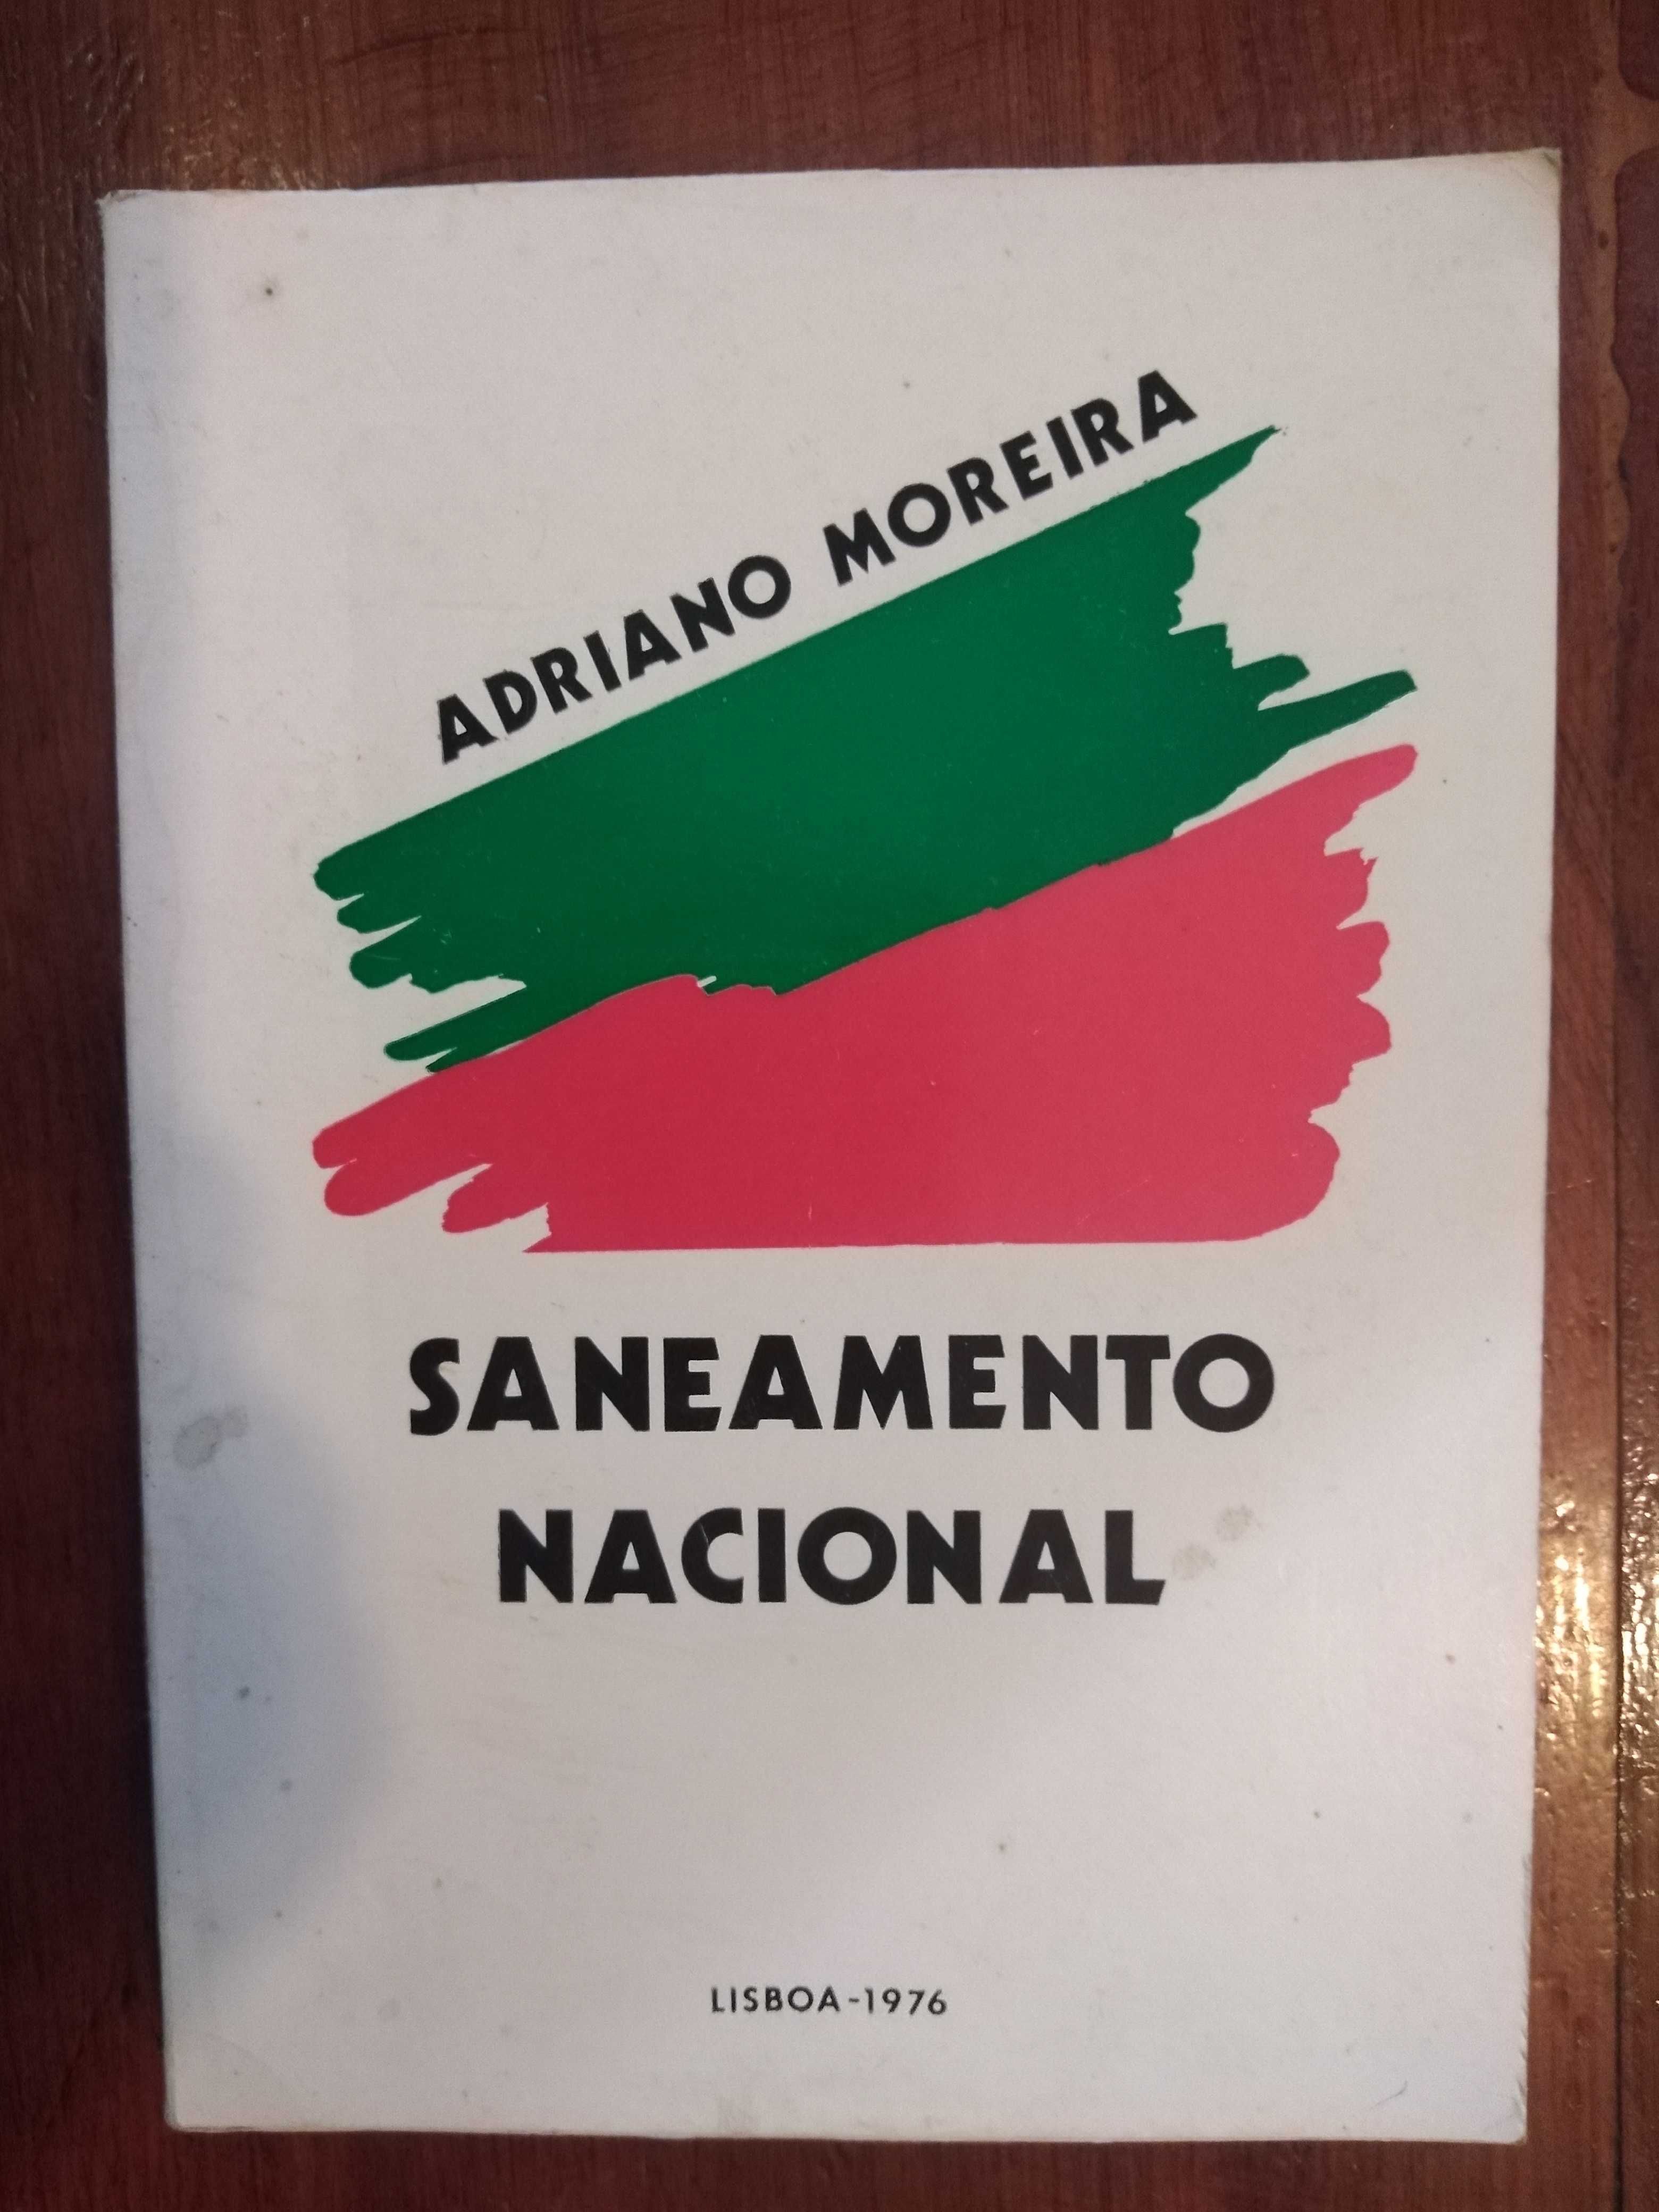 Adriano Moreira - Saneamento nacional